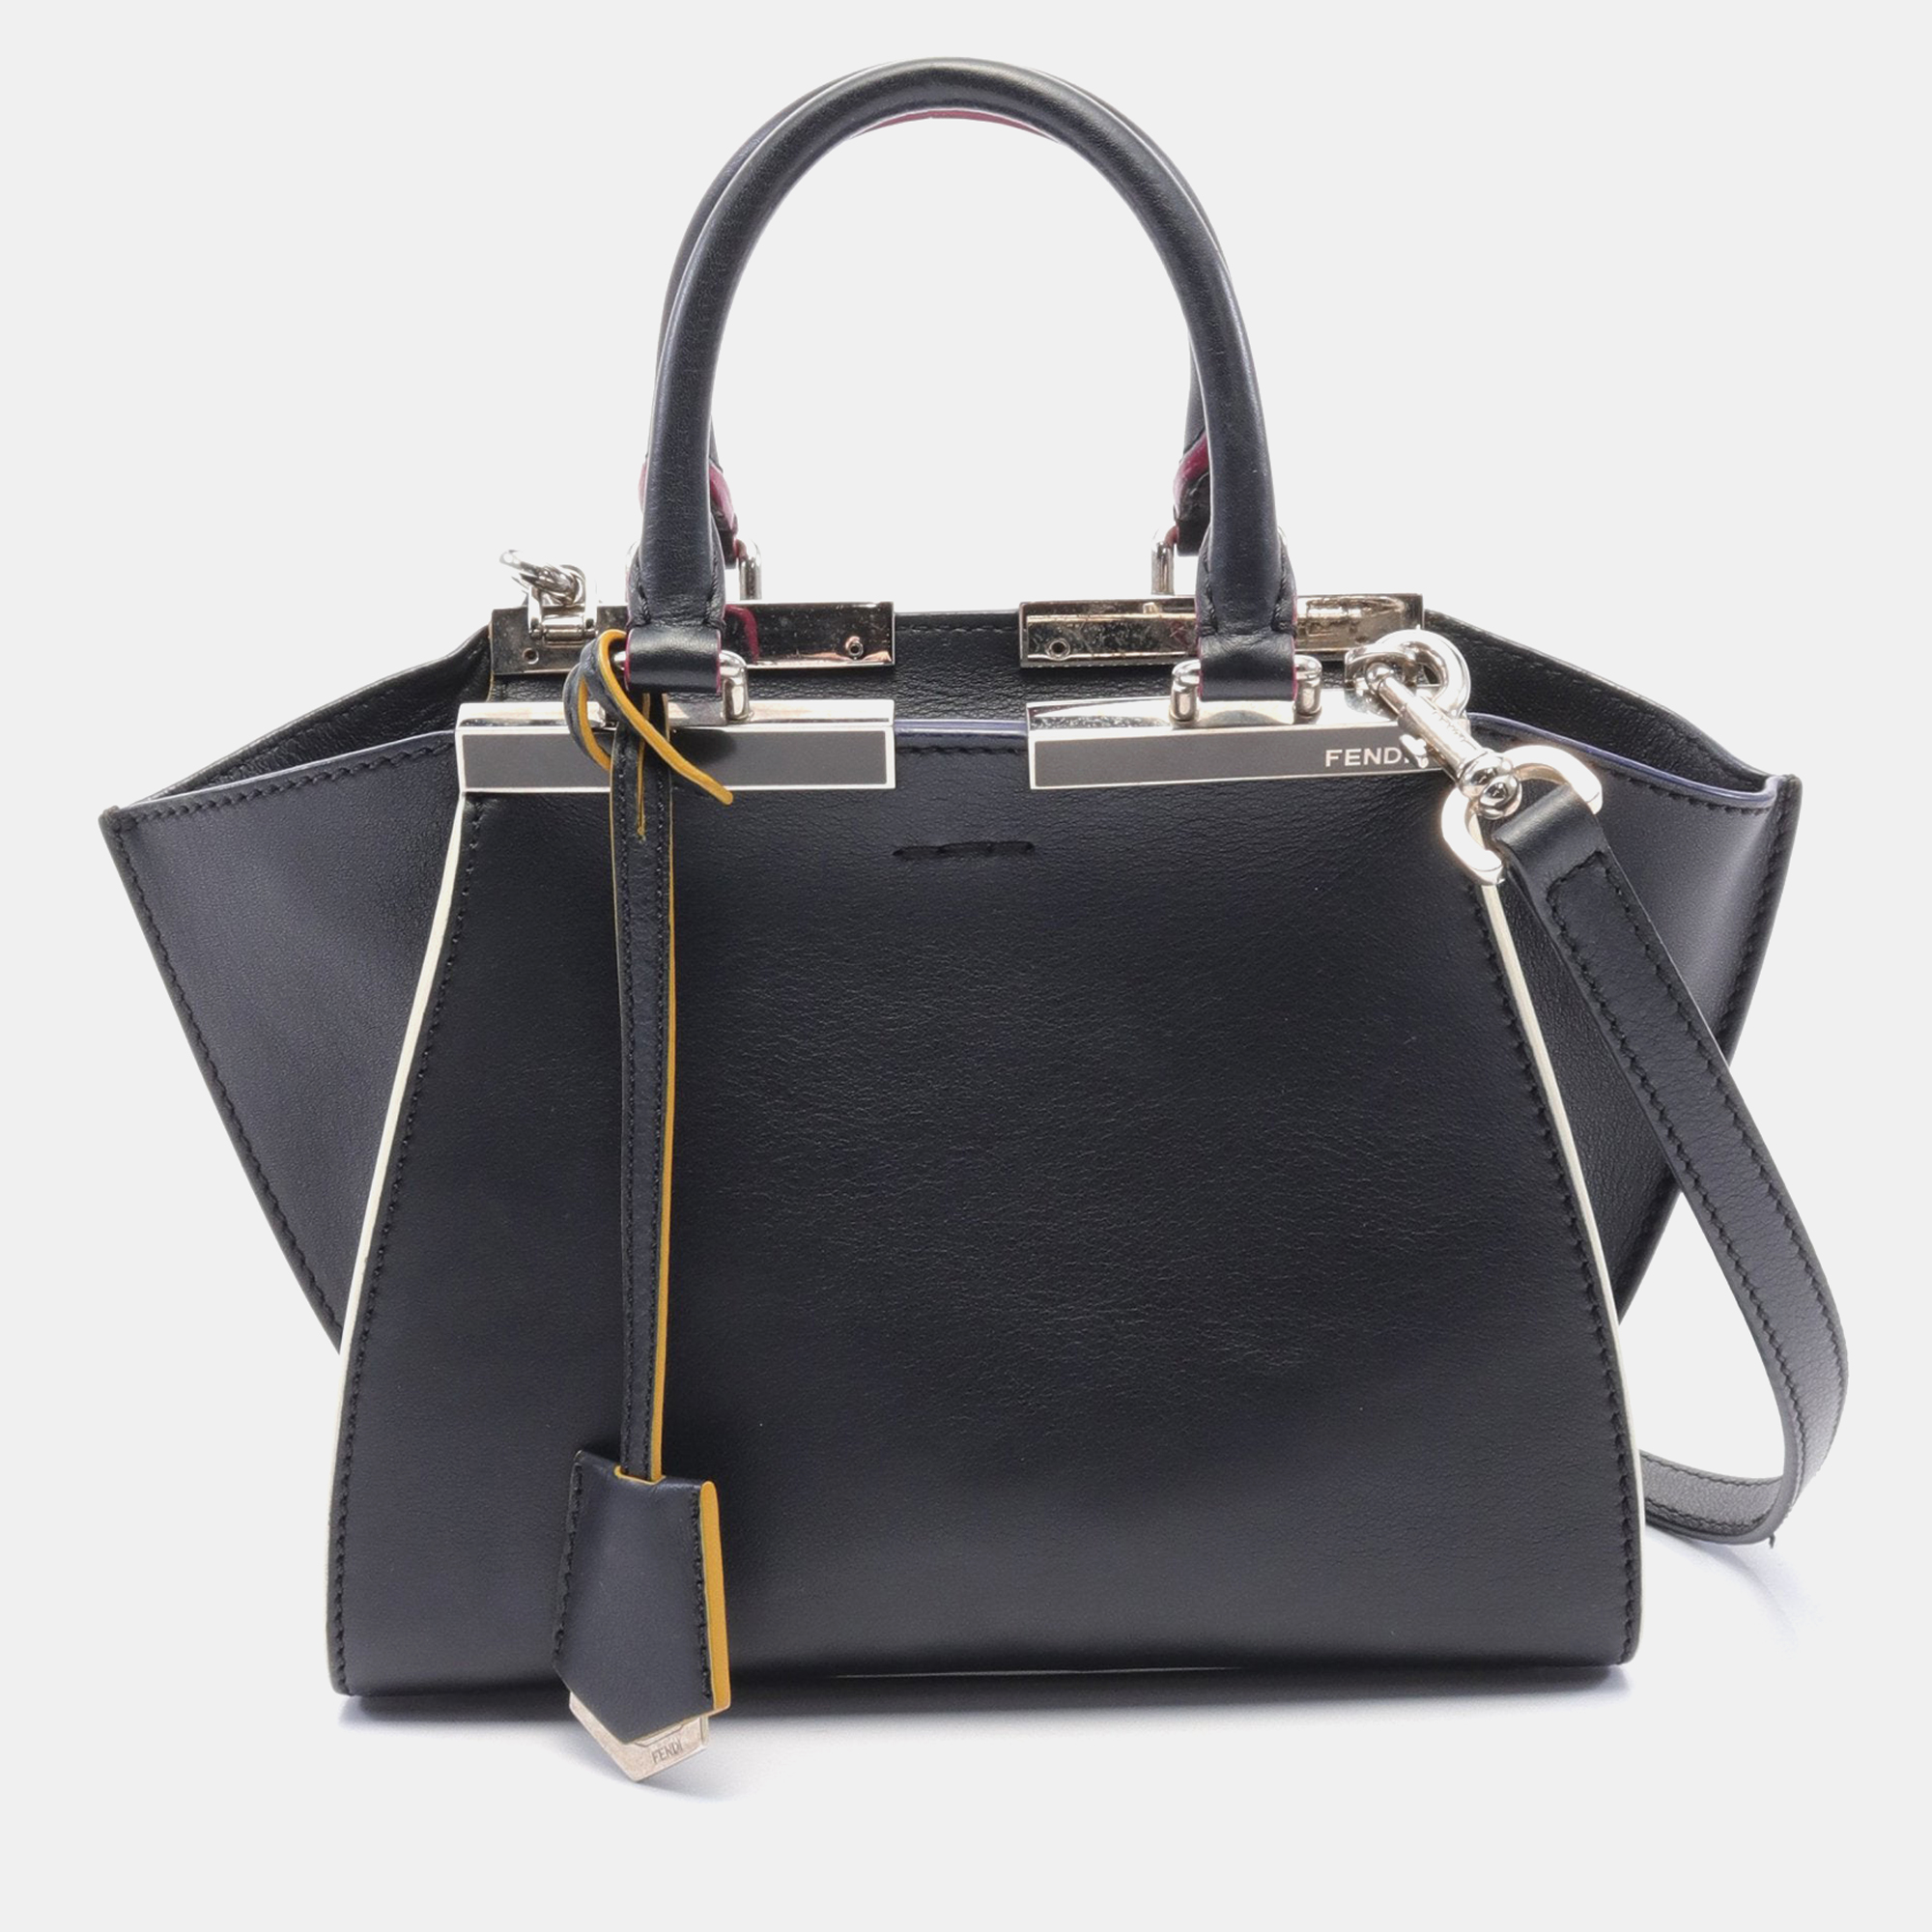 Fendi mini troisours handbag leather black multicolor 2way